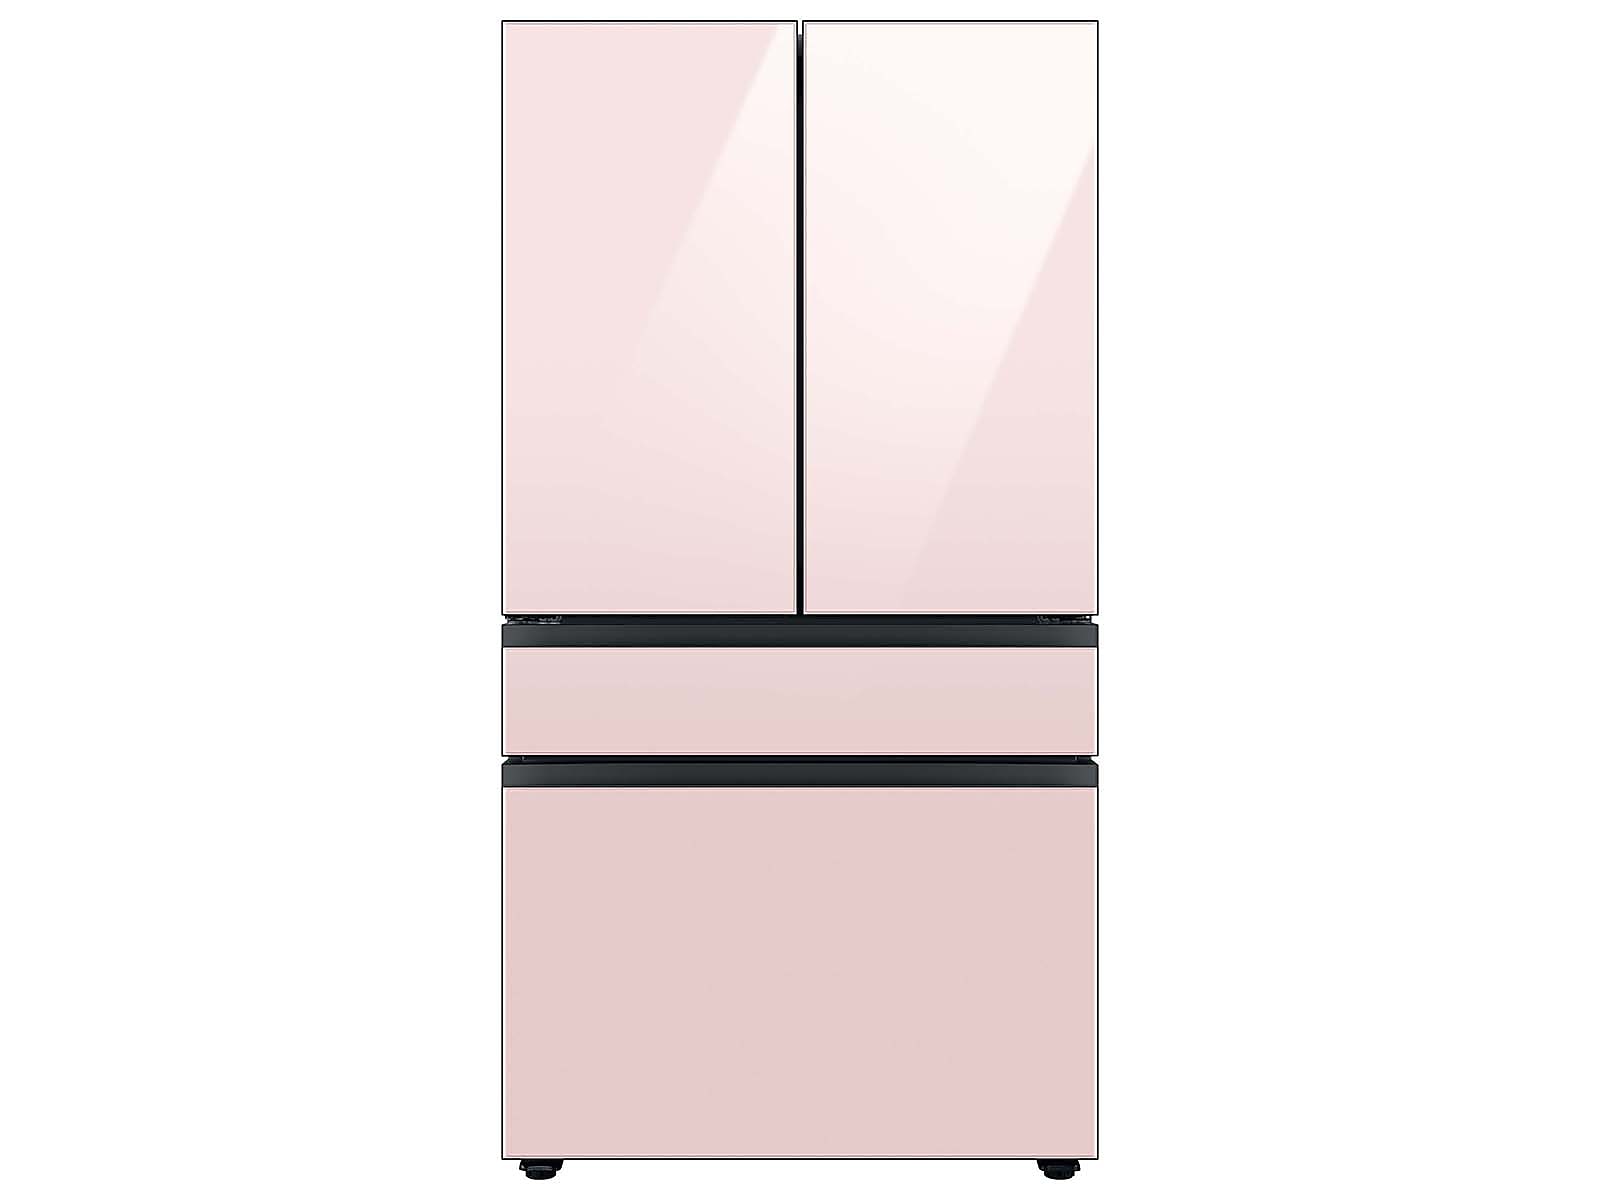 Samsung Bespoke 4-Door French Door Refrigerator in White Glass (29 cu. ft.) with Customizable Door Panel Colors and Beverage Center™ in Rose Pink Glass